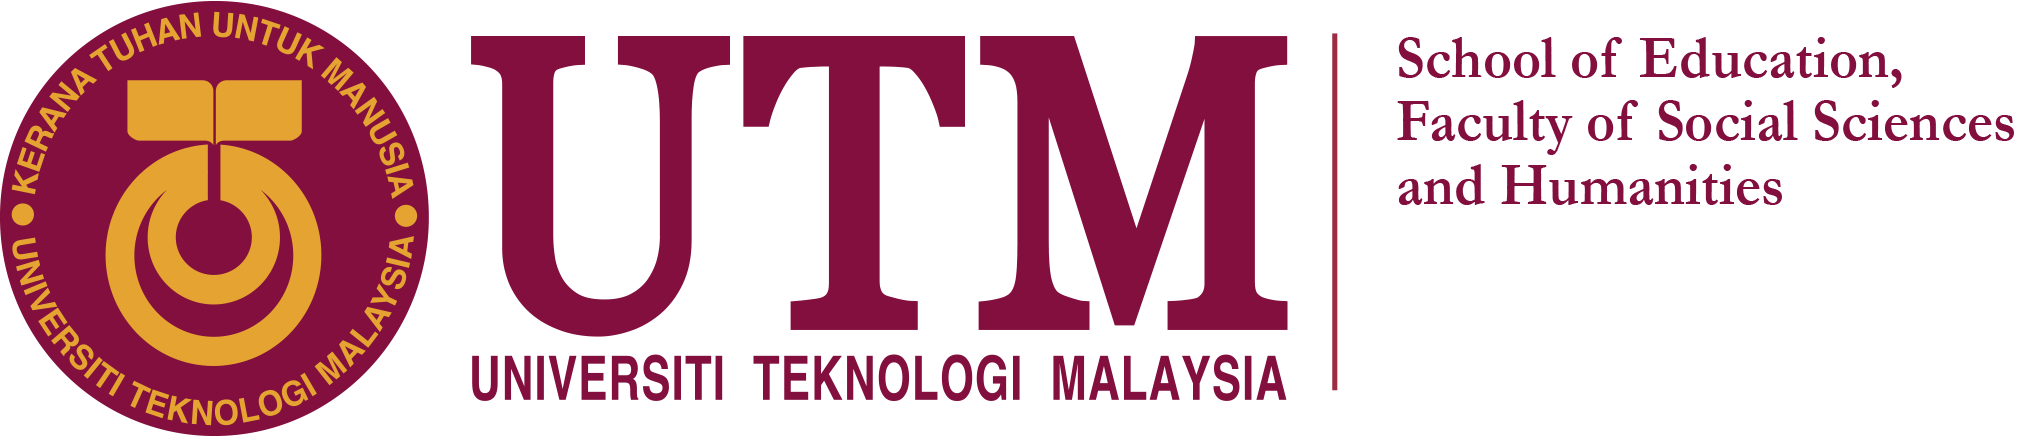 UTM Logo - Contact Us. School of Education, Faculty of Social Sciences